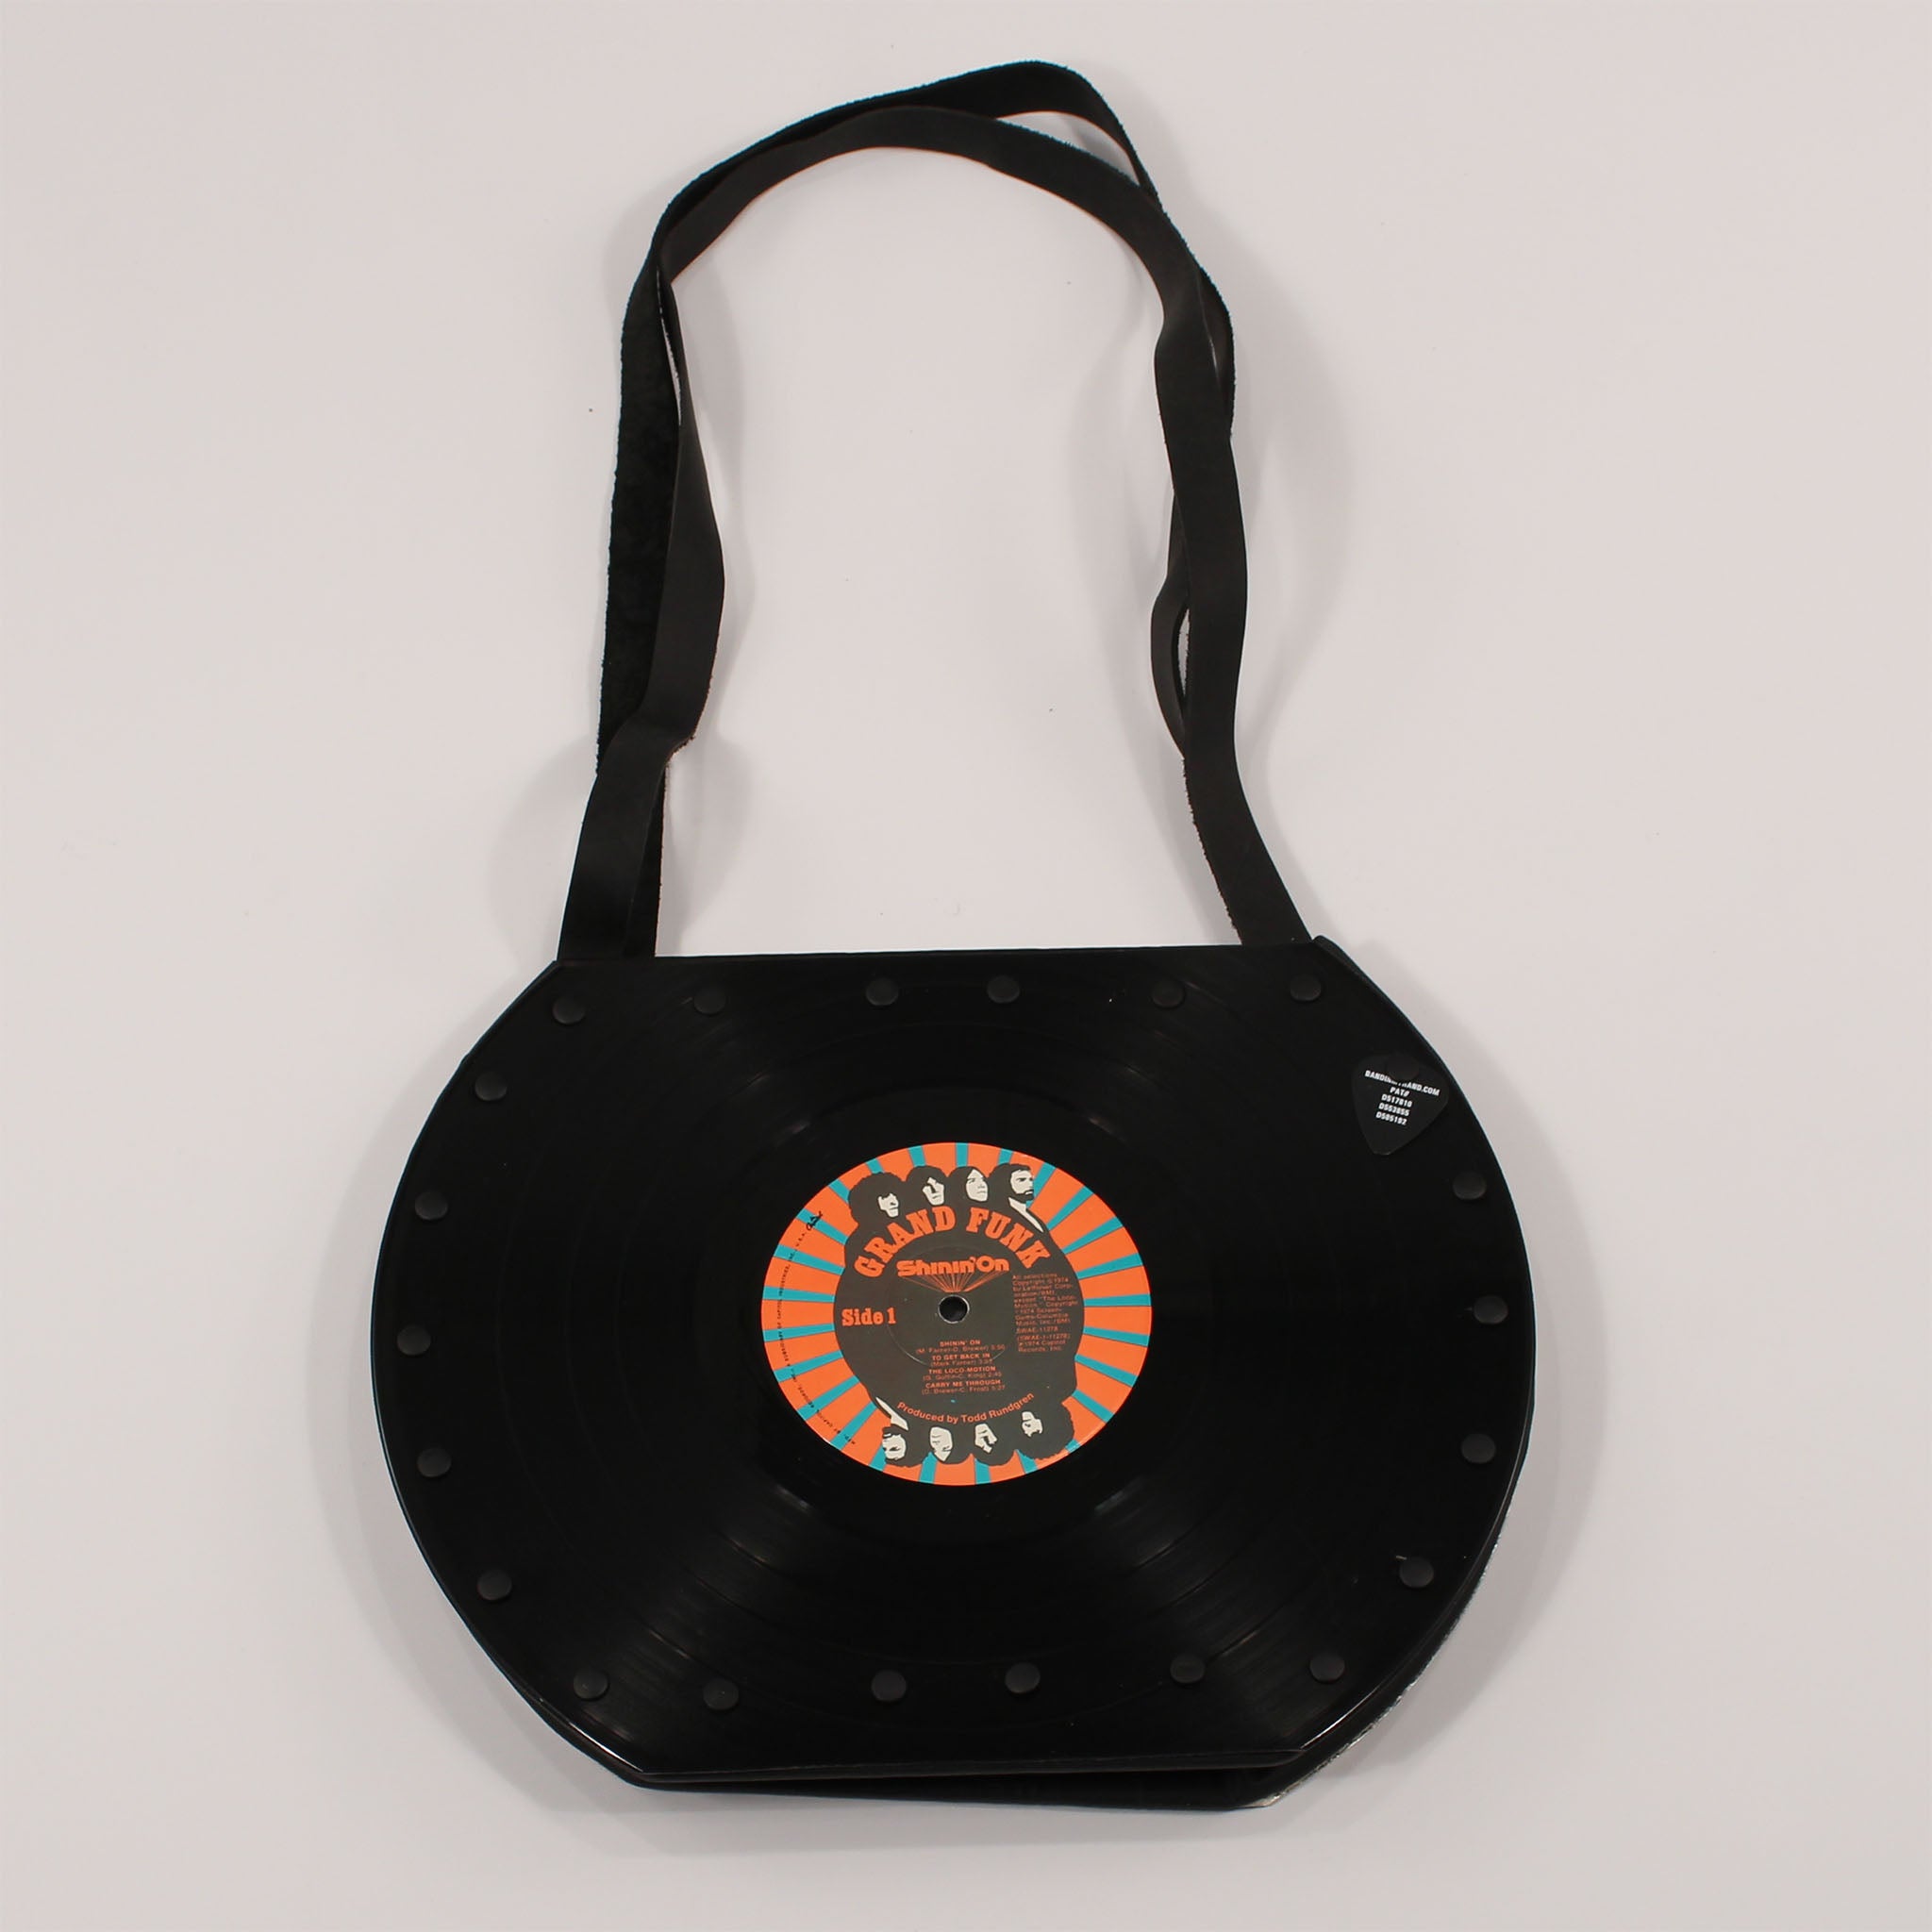 Vintage Handbag Made From Recycled Vinyl Records 